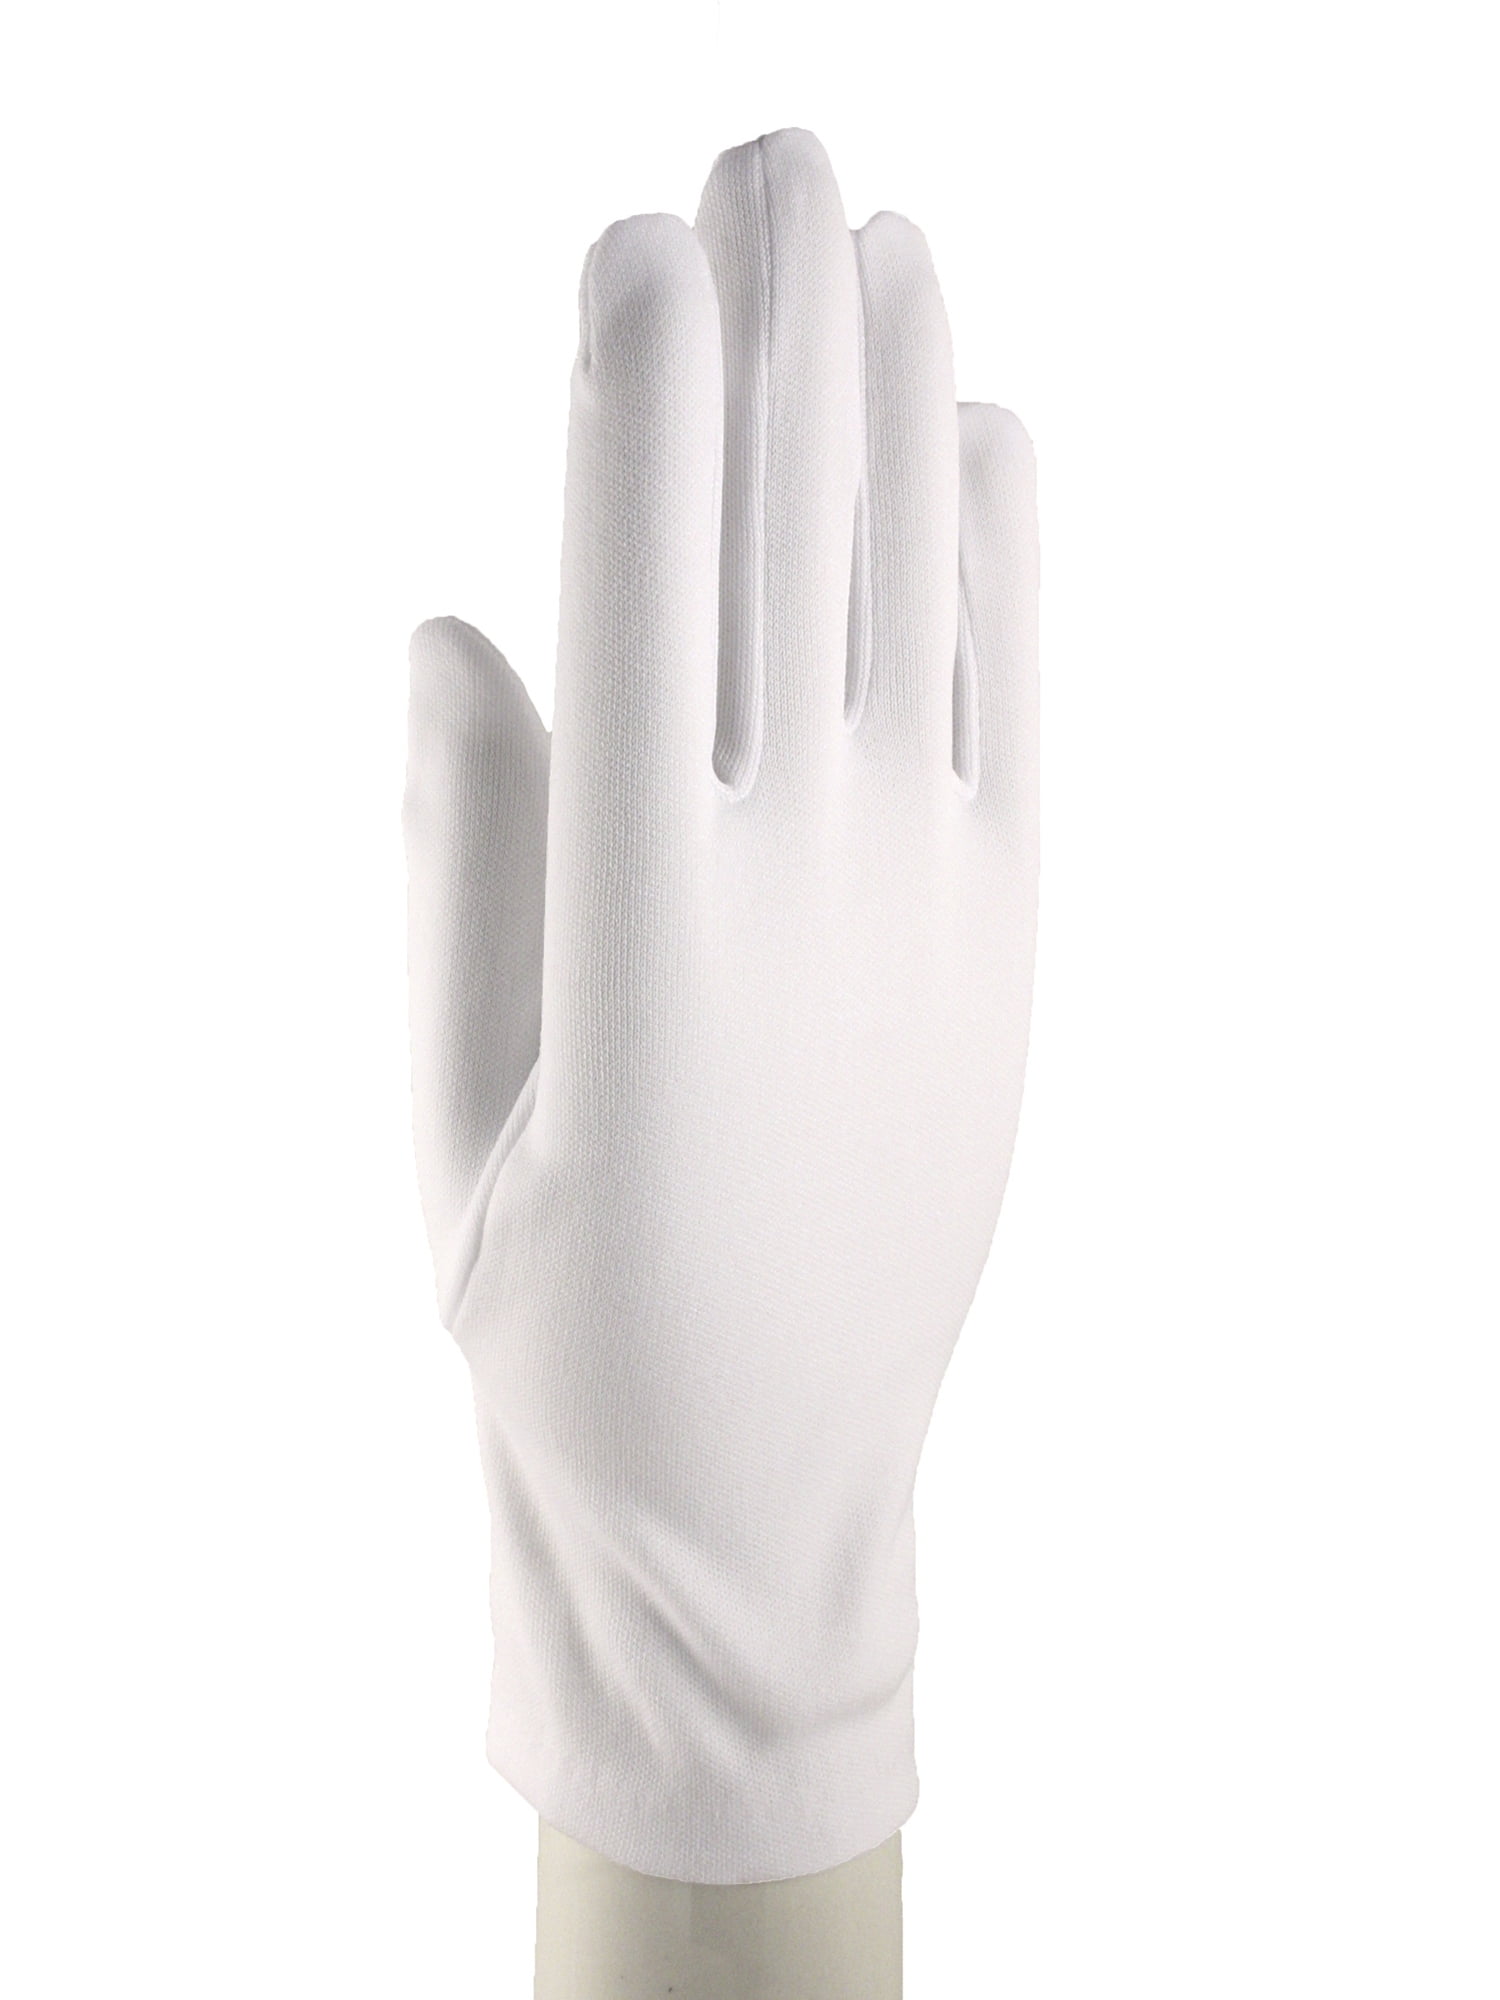 Church Formal White Black & 7 Colors Dress Up Wrist Length Dress Gloves 